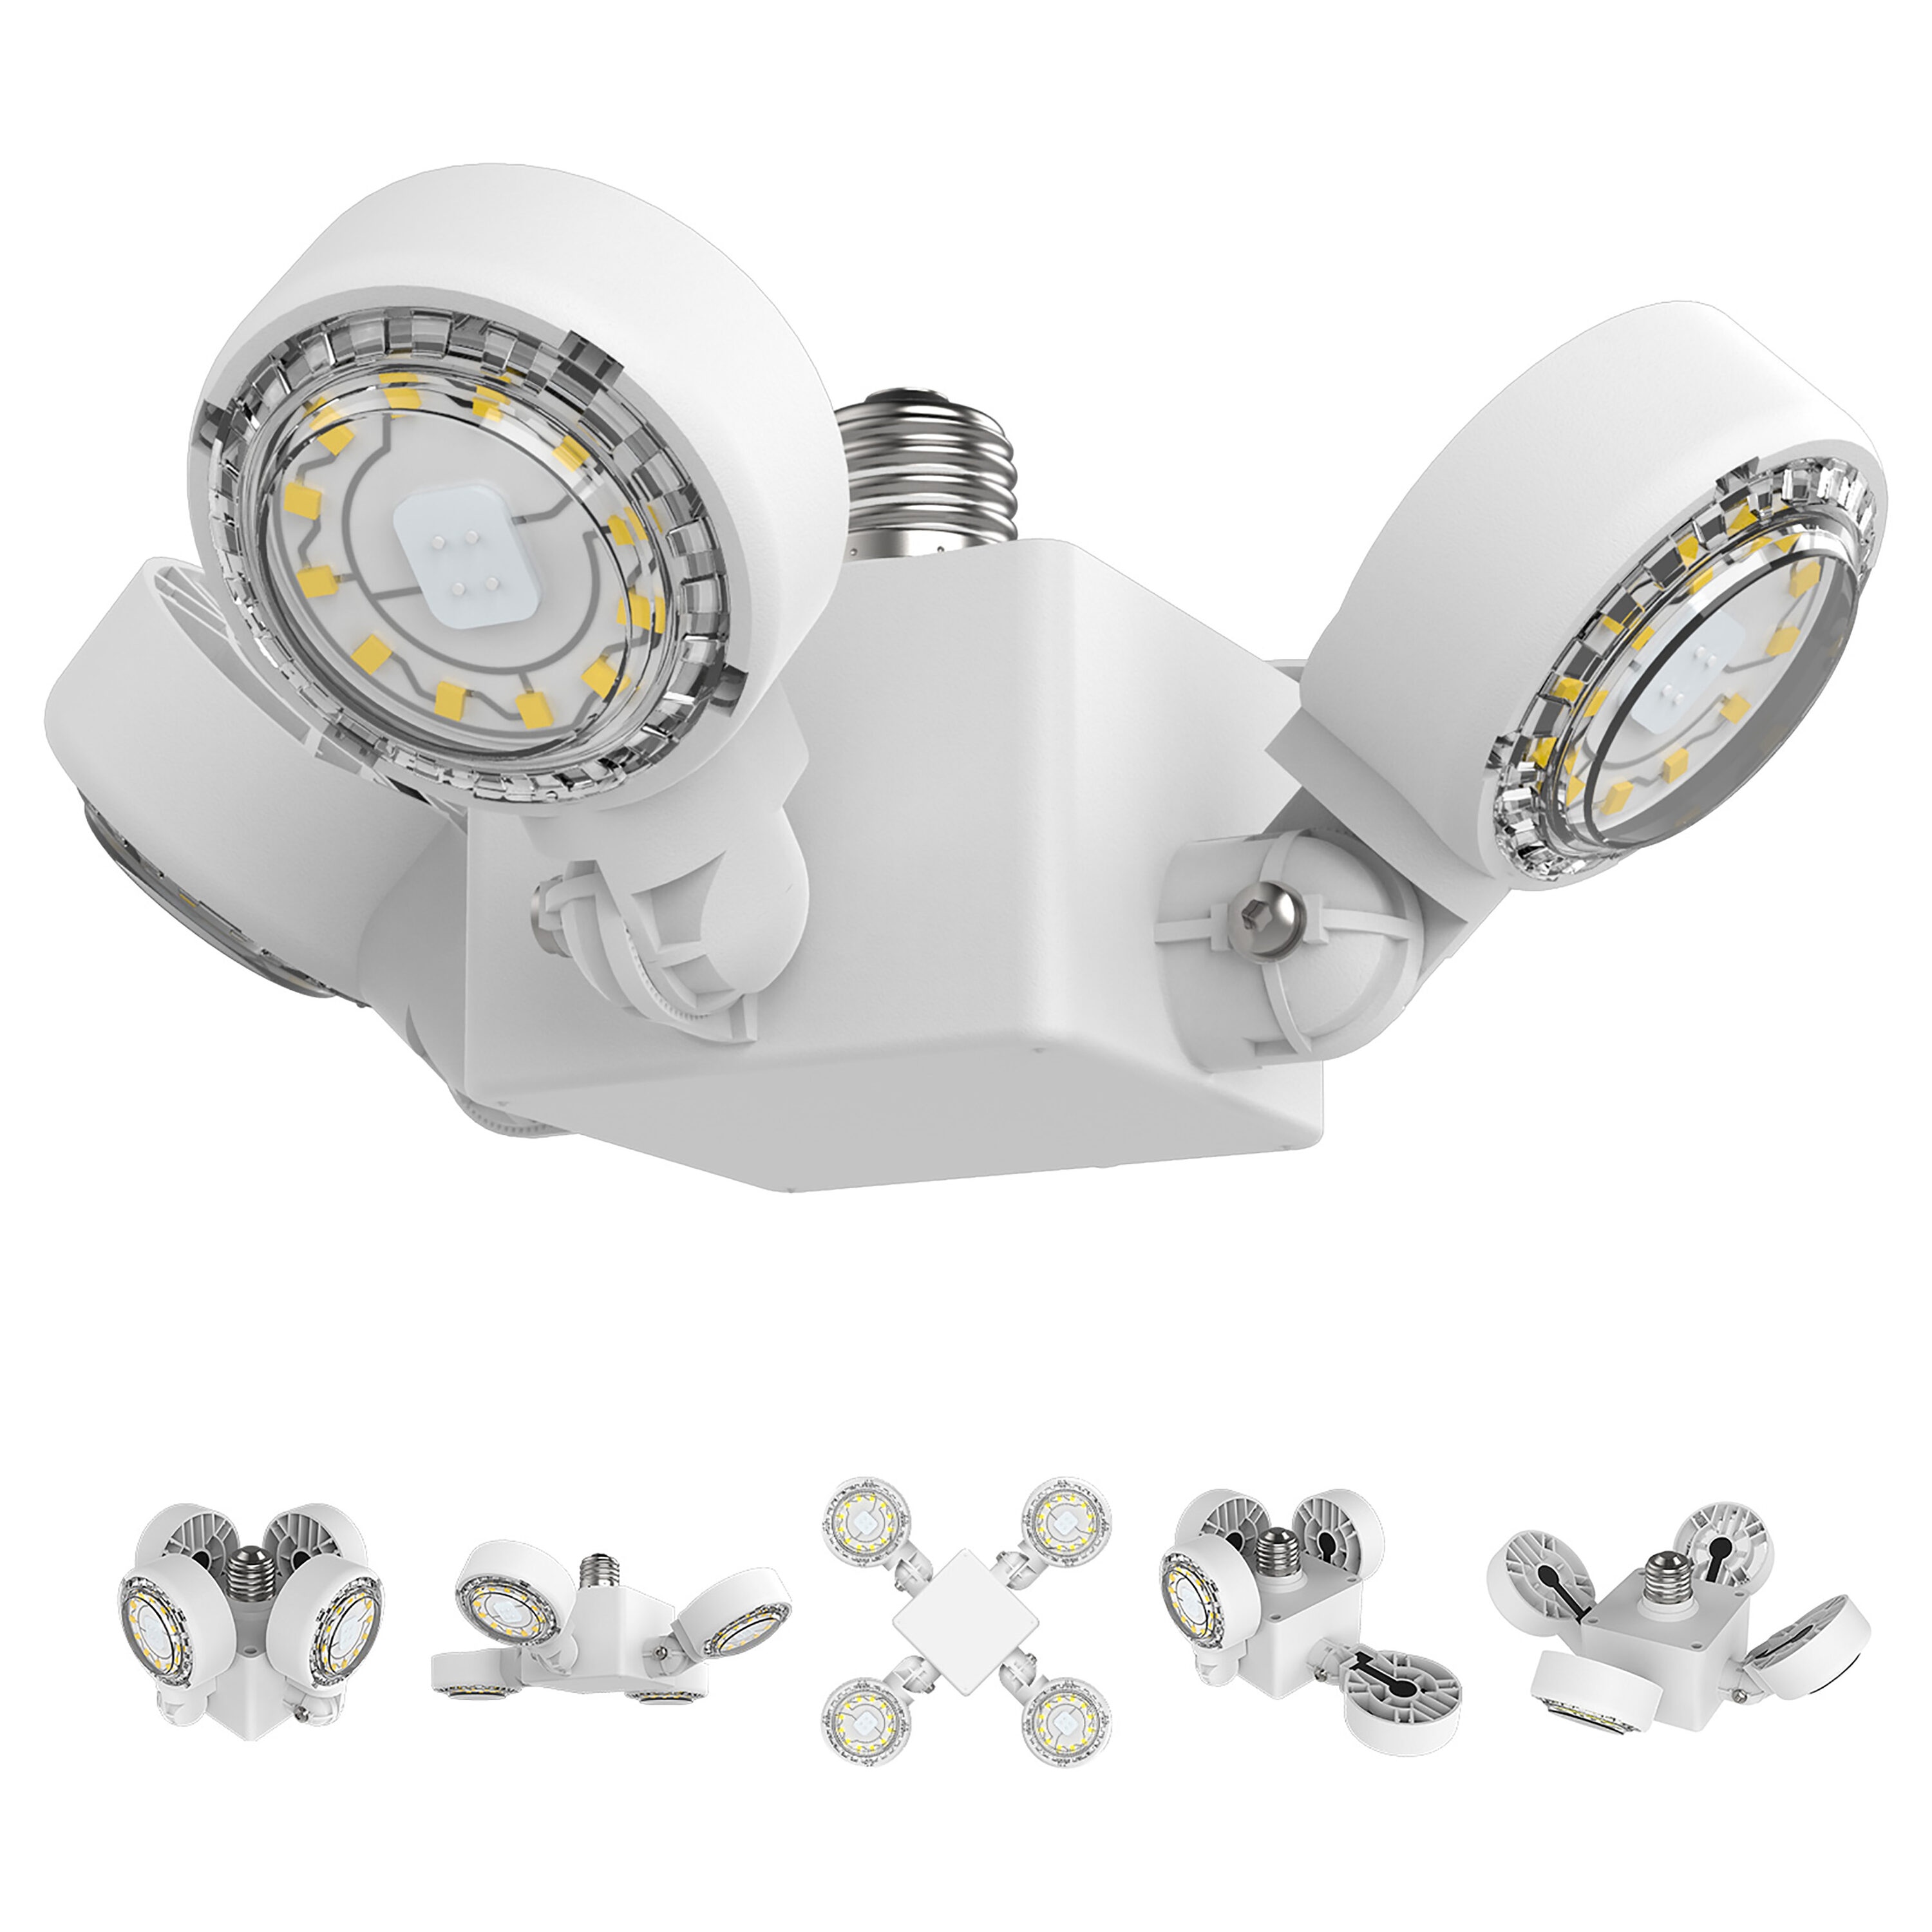 Megalight Value Pack LED Flashlight & Collapsible Lantern